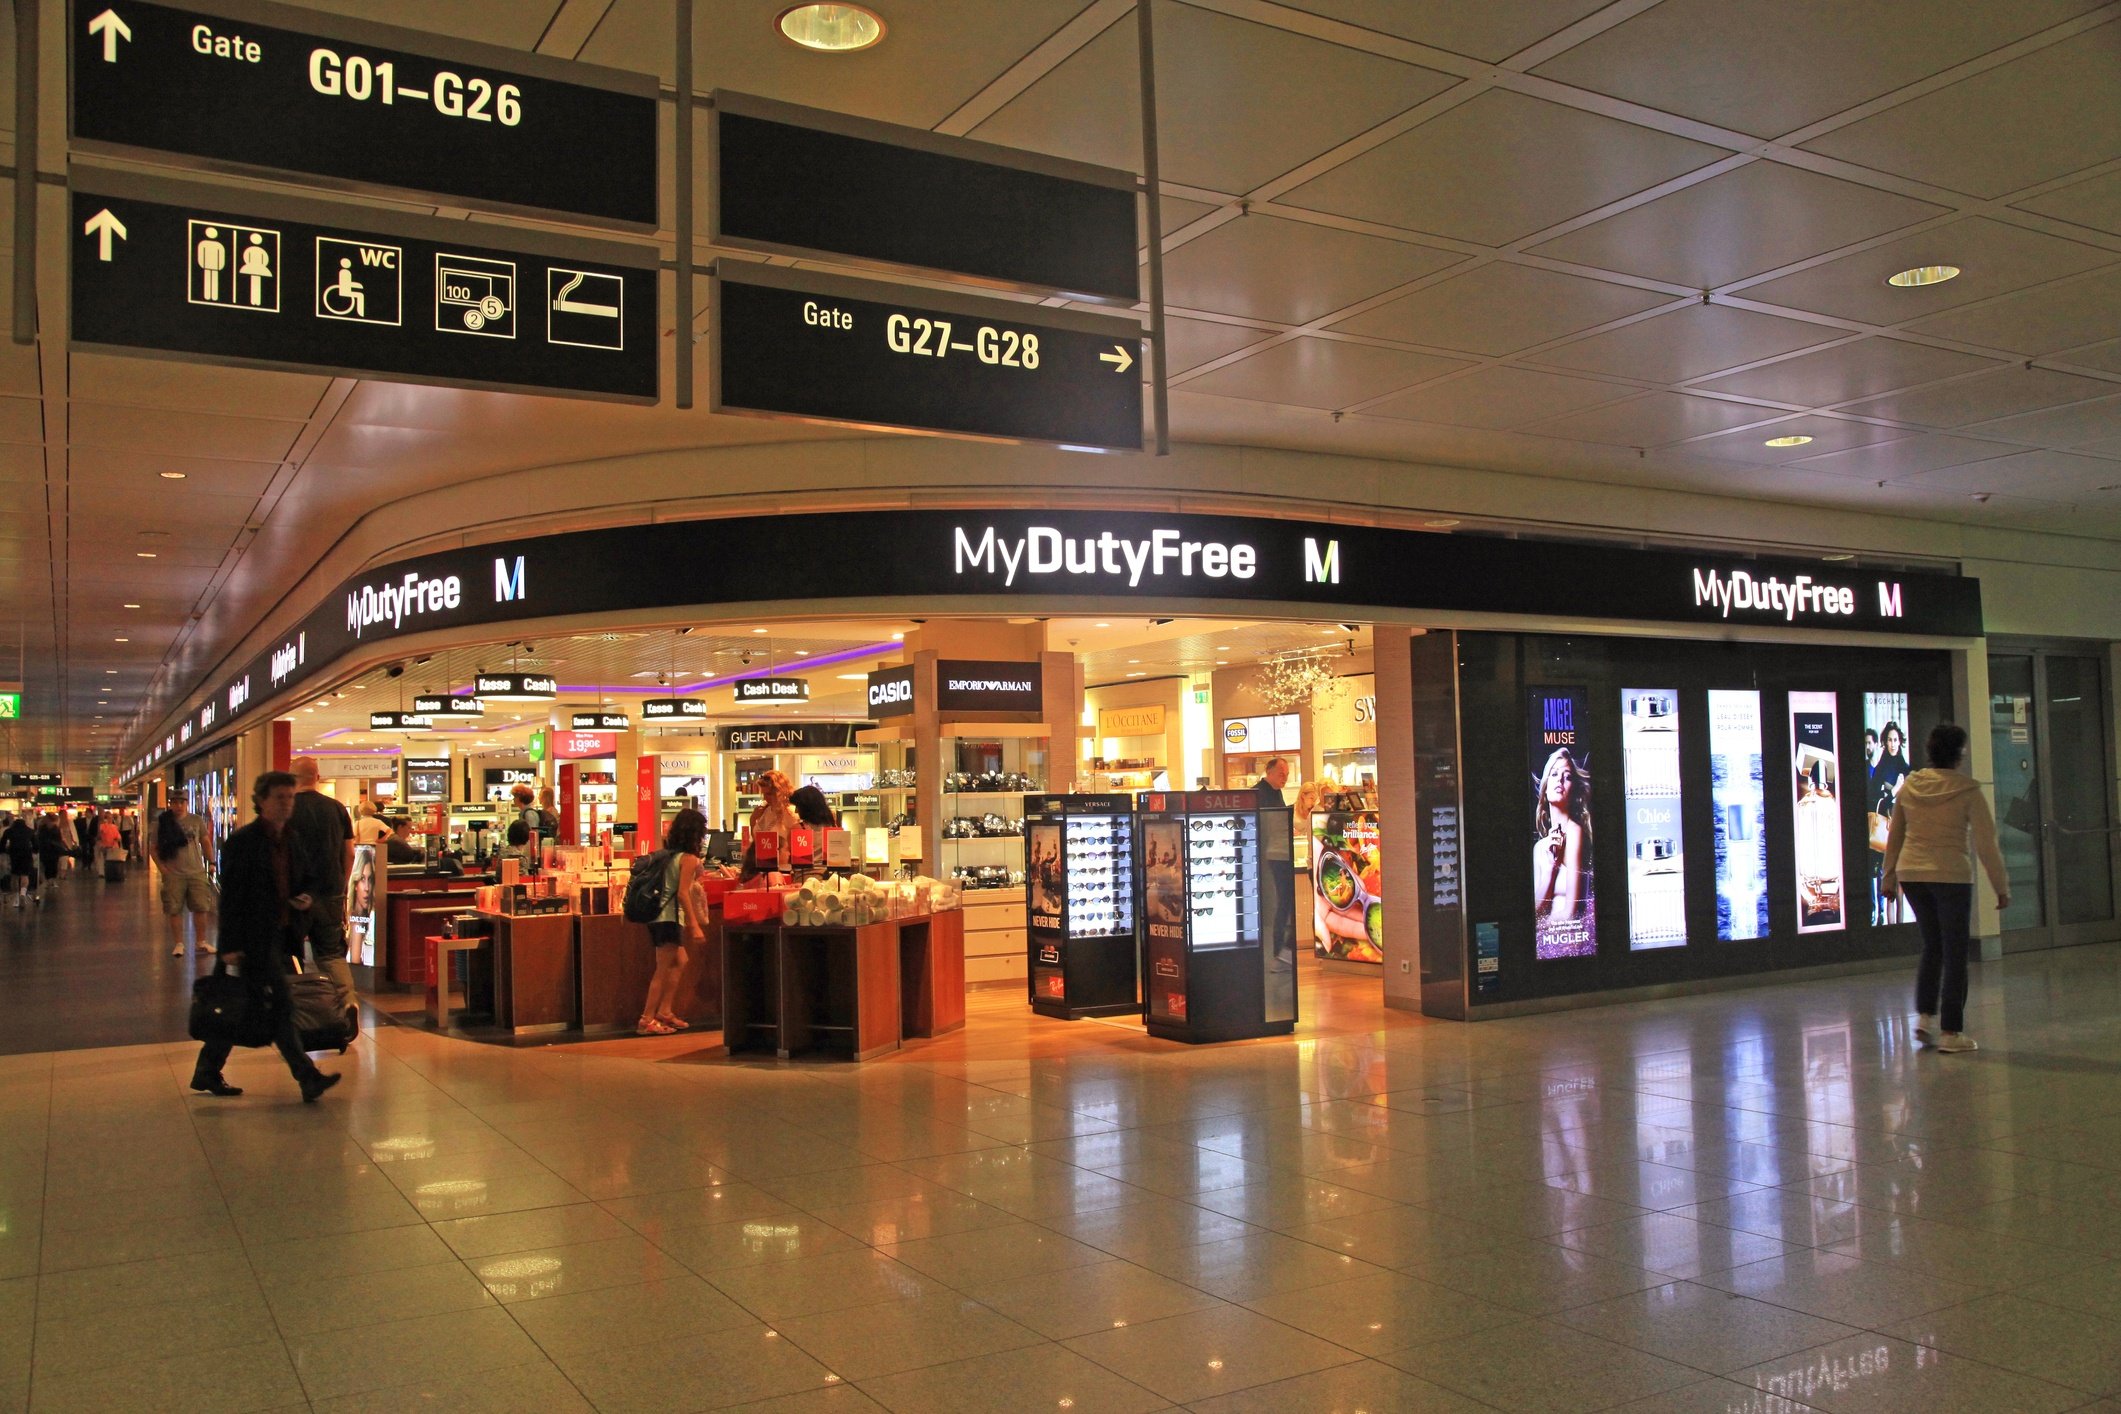 Duty free shop in airport, Munich, Germany.